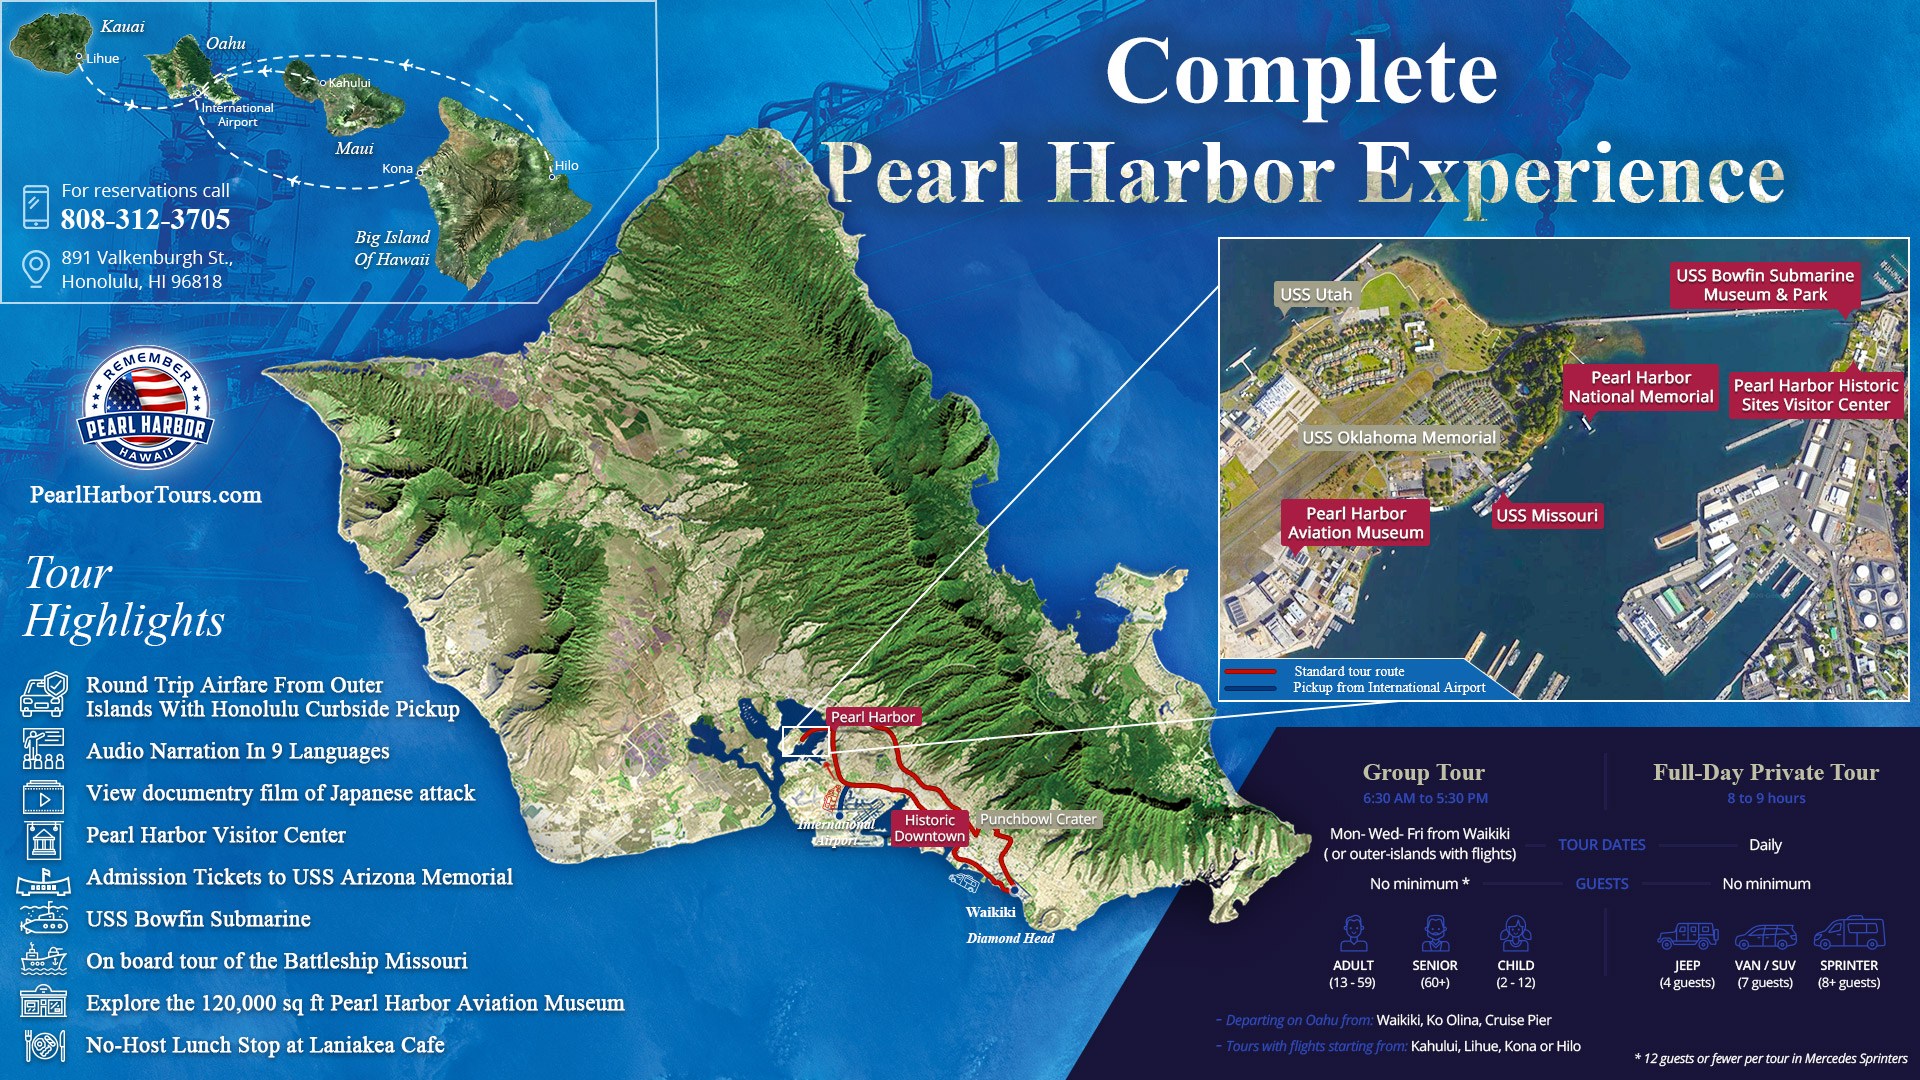 Complete Pearl Harbor Experience From Maui Kauai Or Big Island 